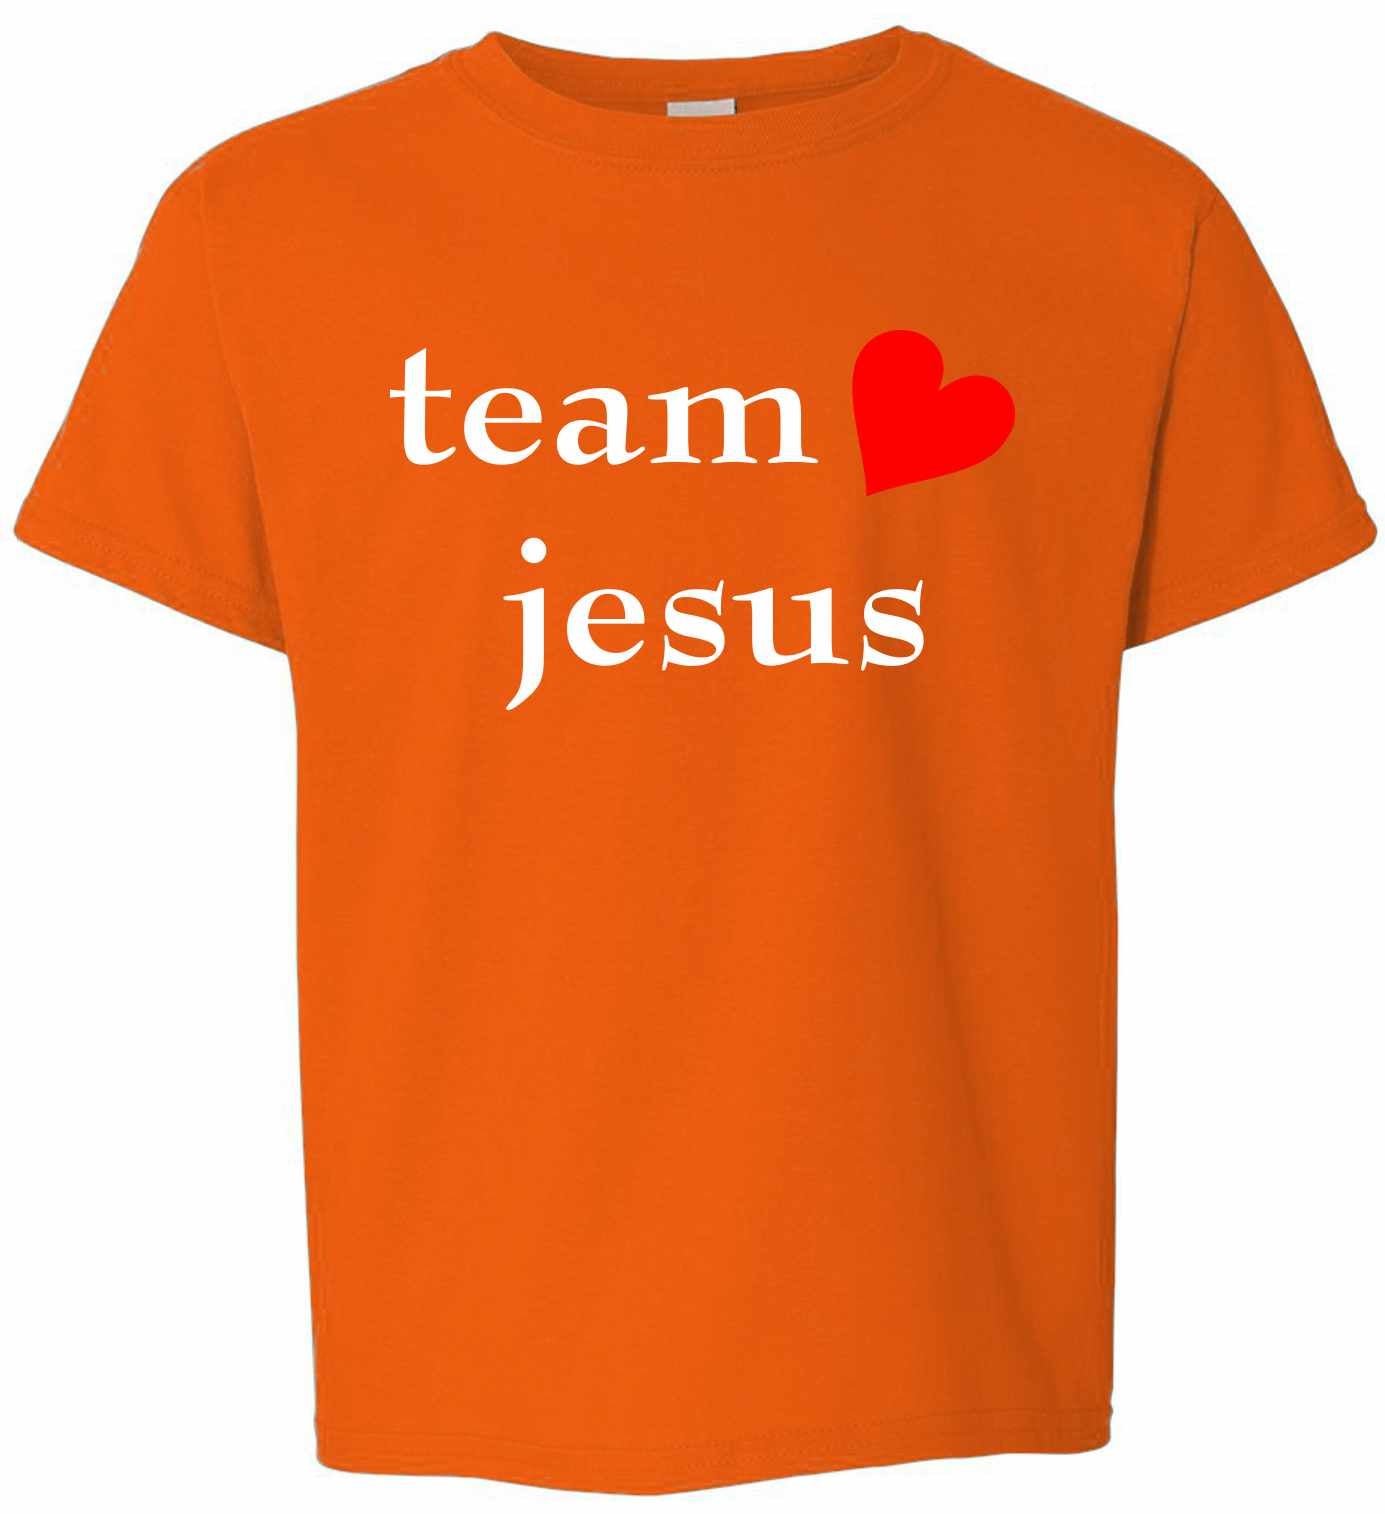 Team Jesus (heart) on Kids T-Shirt (#1163-201)